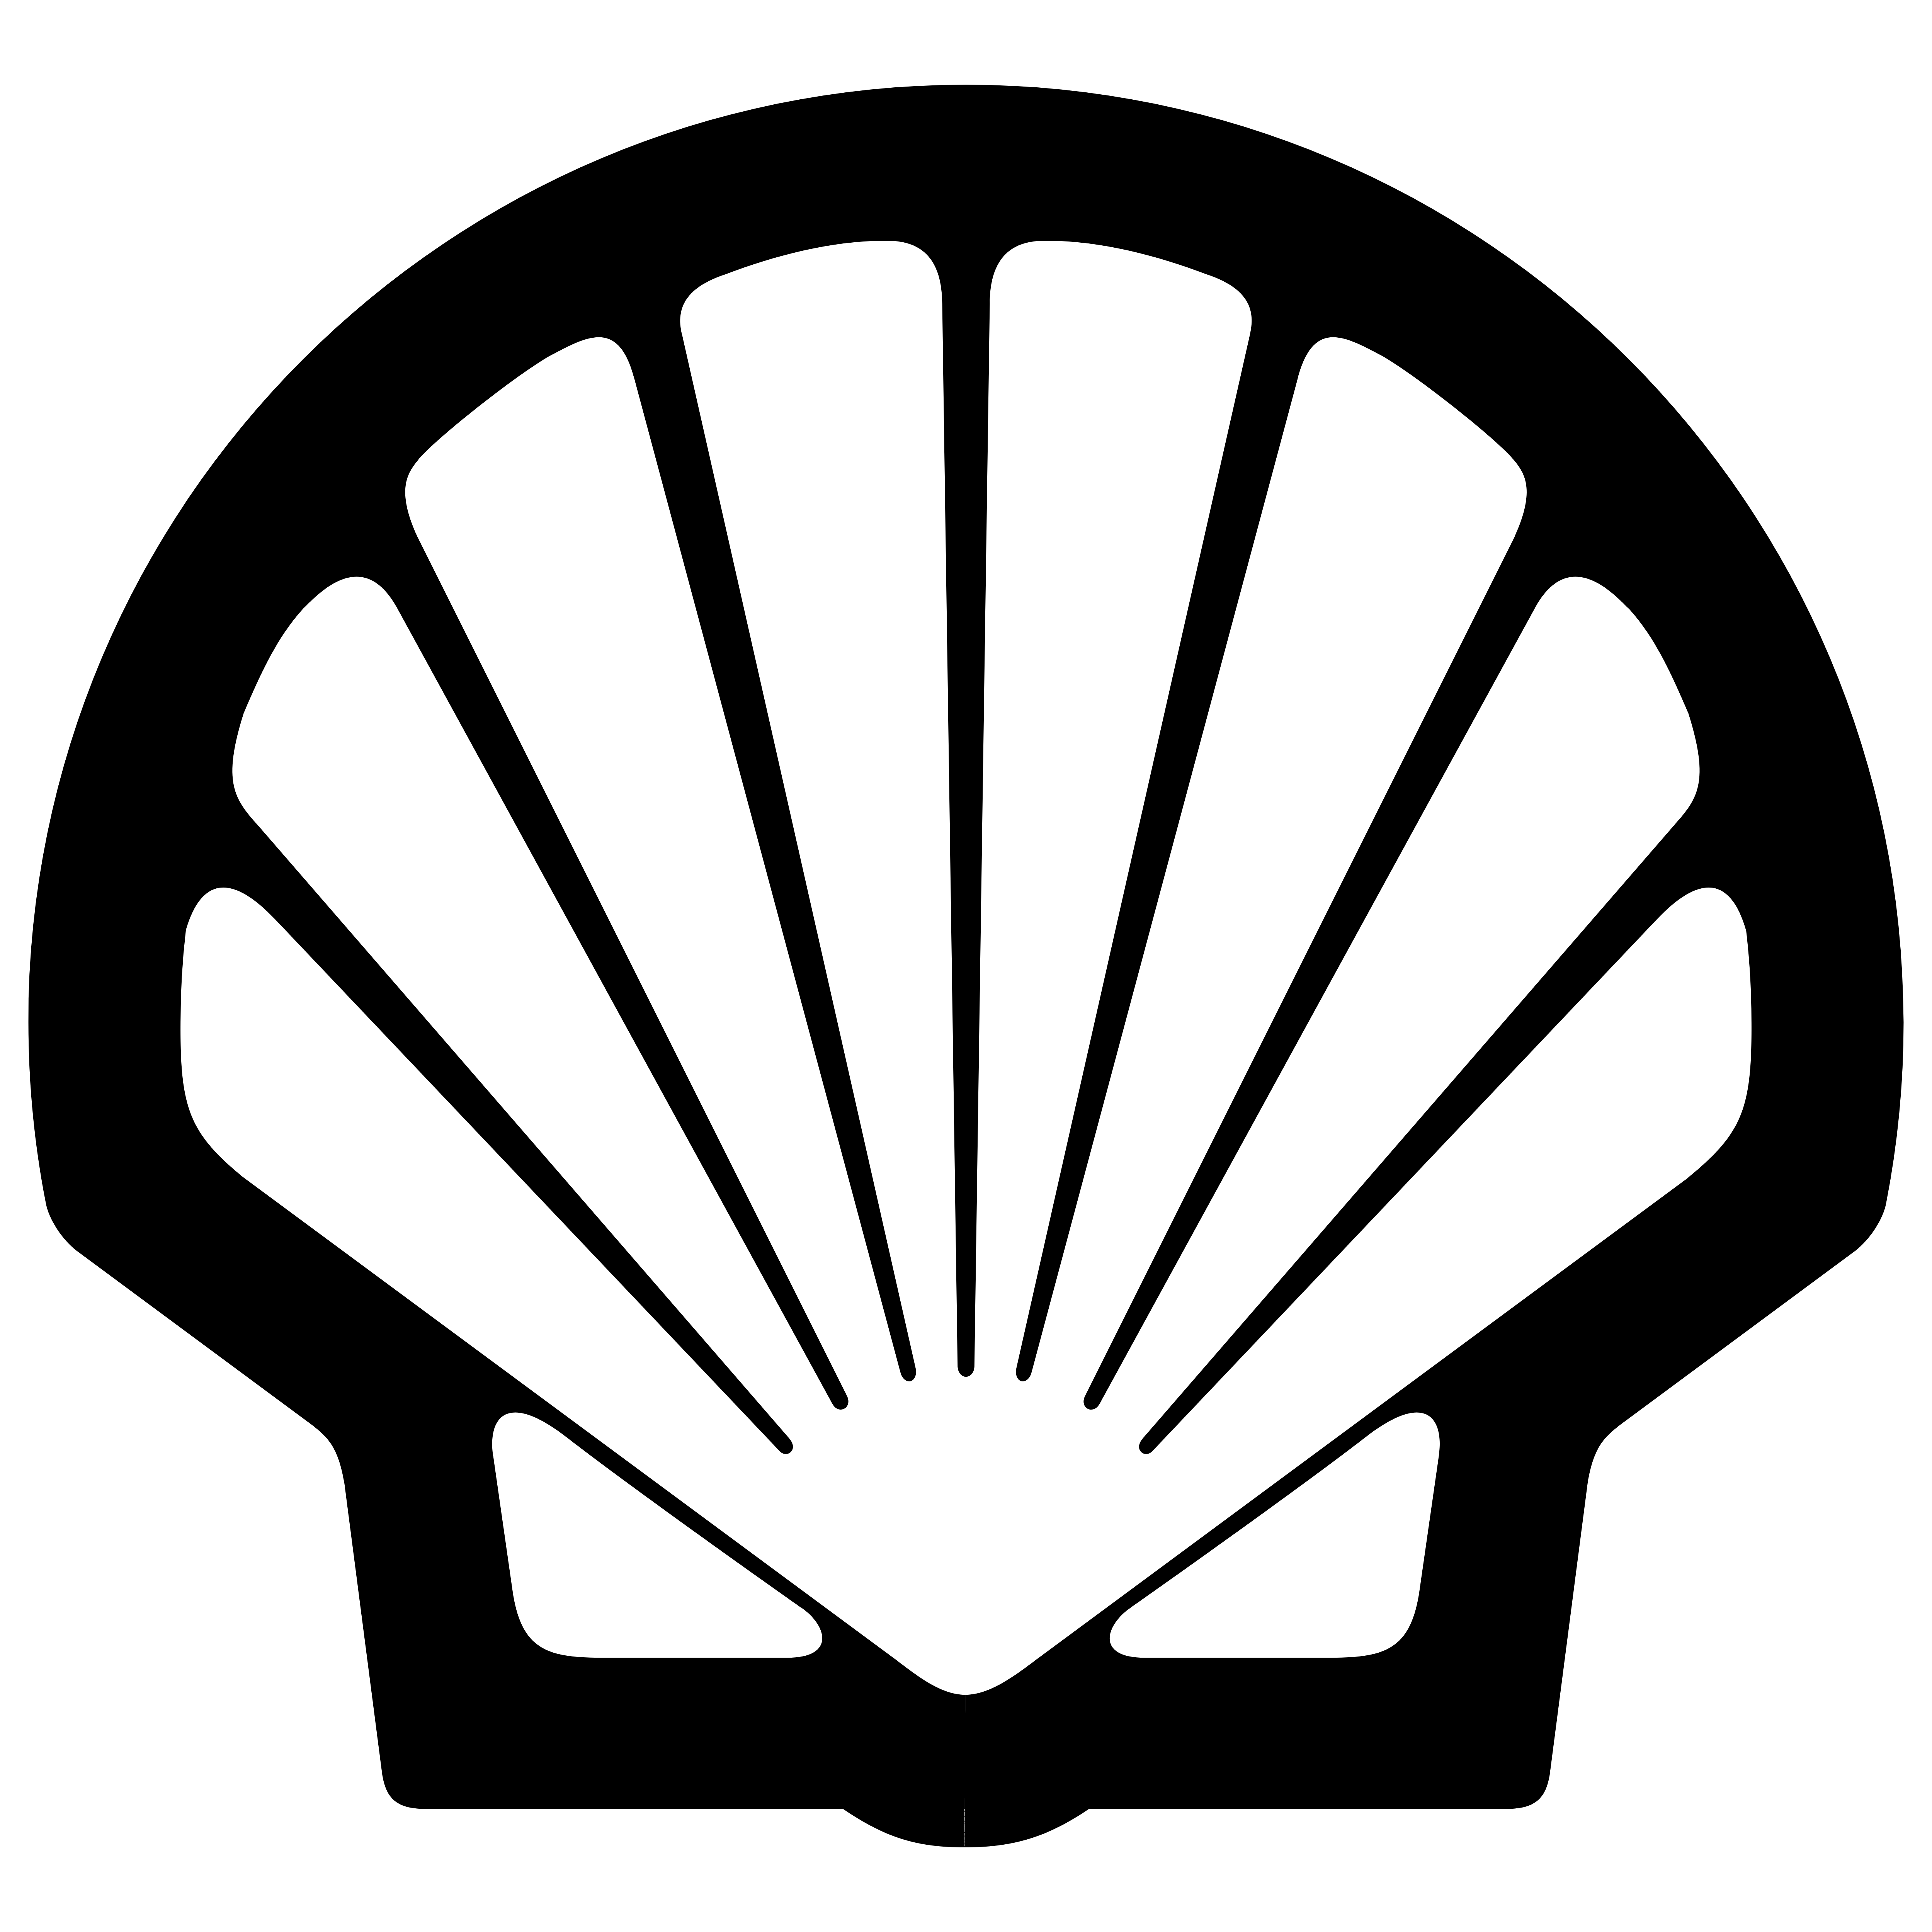 Shell Logo Png Images, Transp